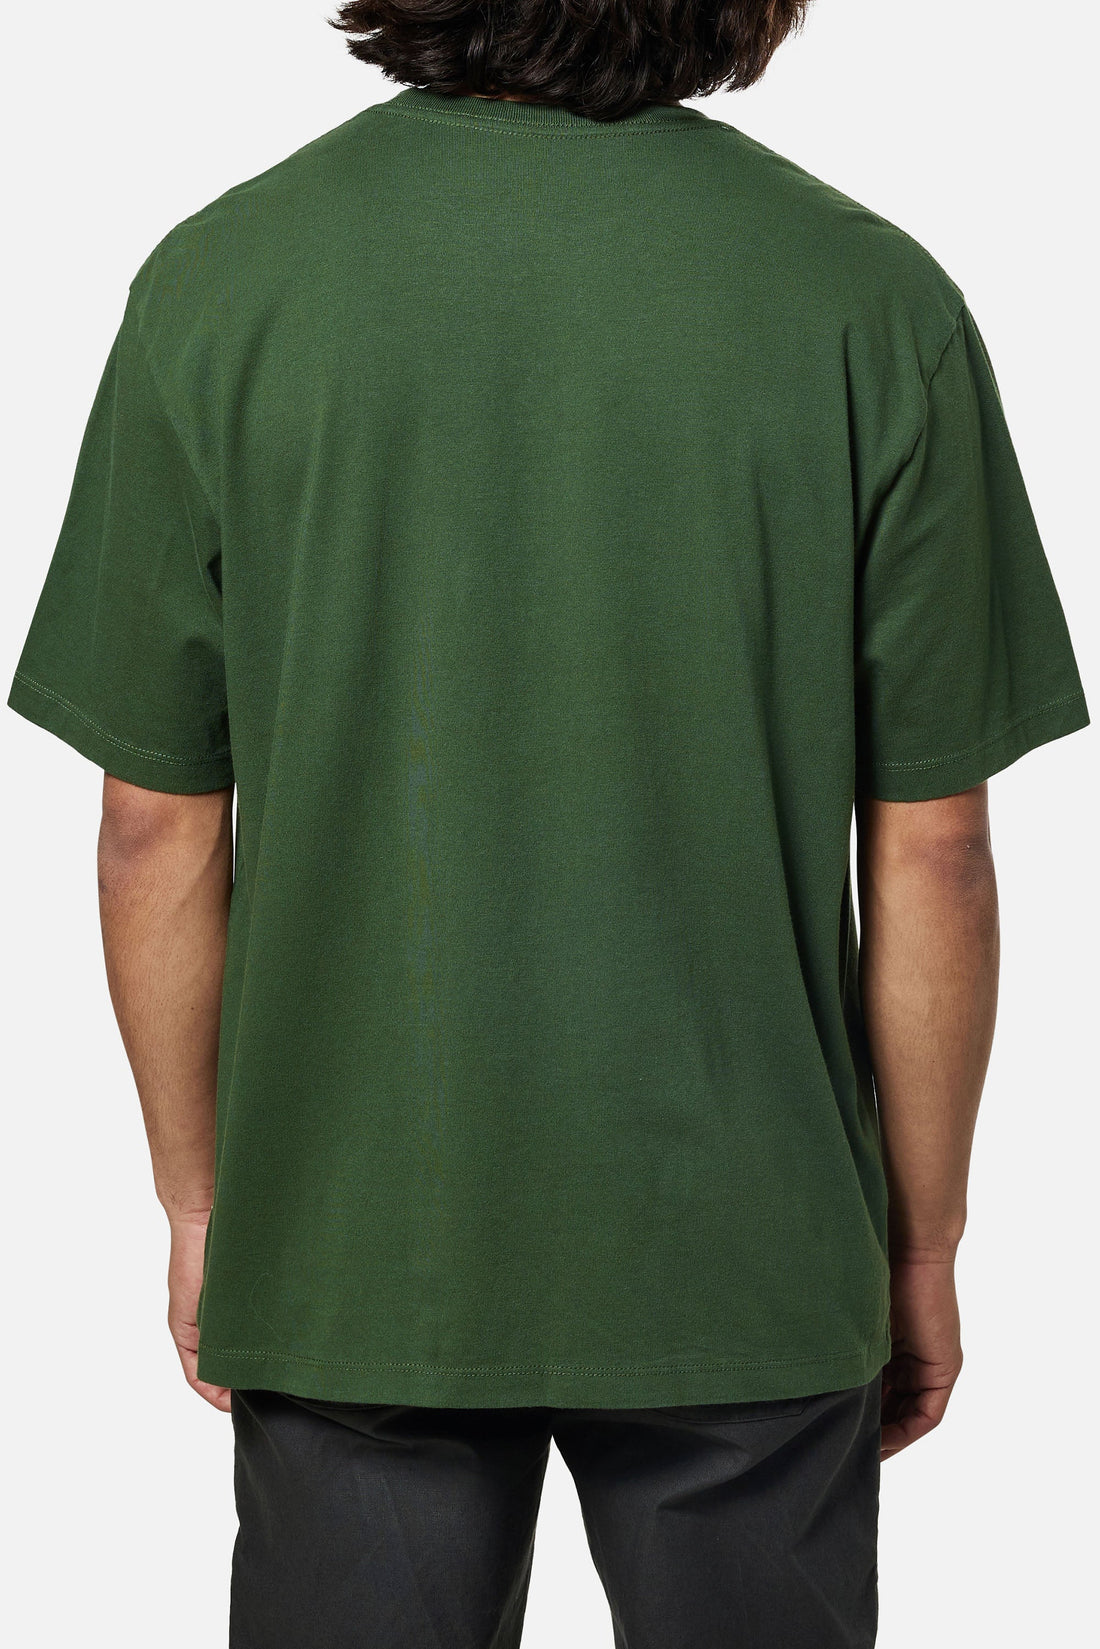 T-Shirt Box Fit Vert Foret Katin